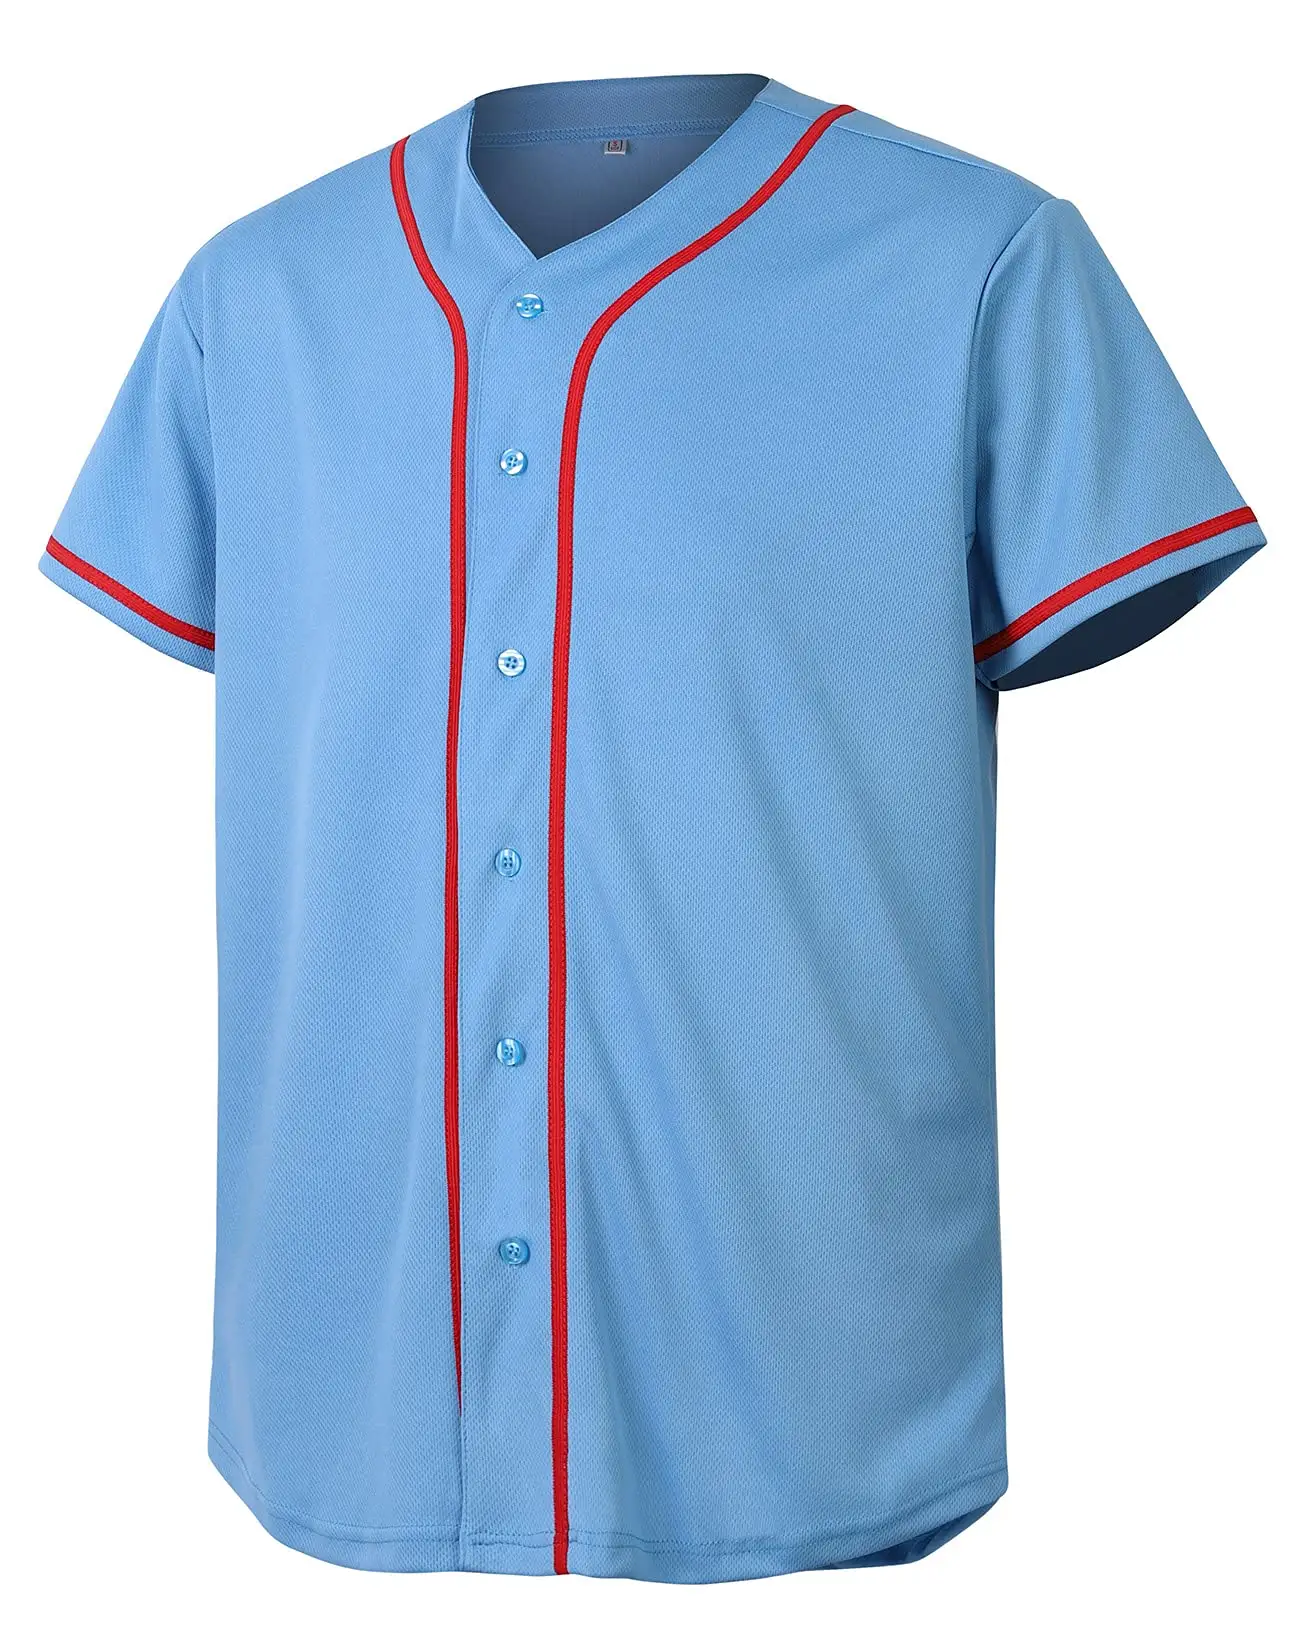 Unique Baseball Jersey With Customized logo Printed New Fashion Baseball Shirt Softball Game Training Clothes Men